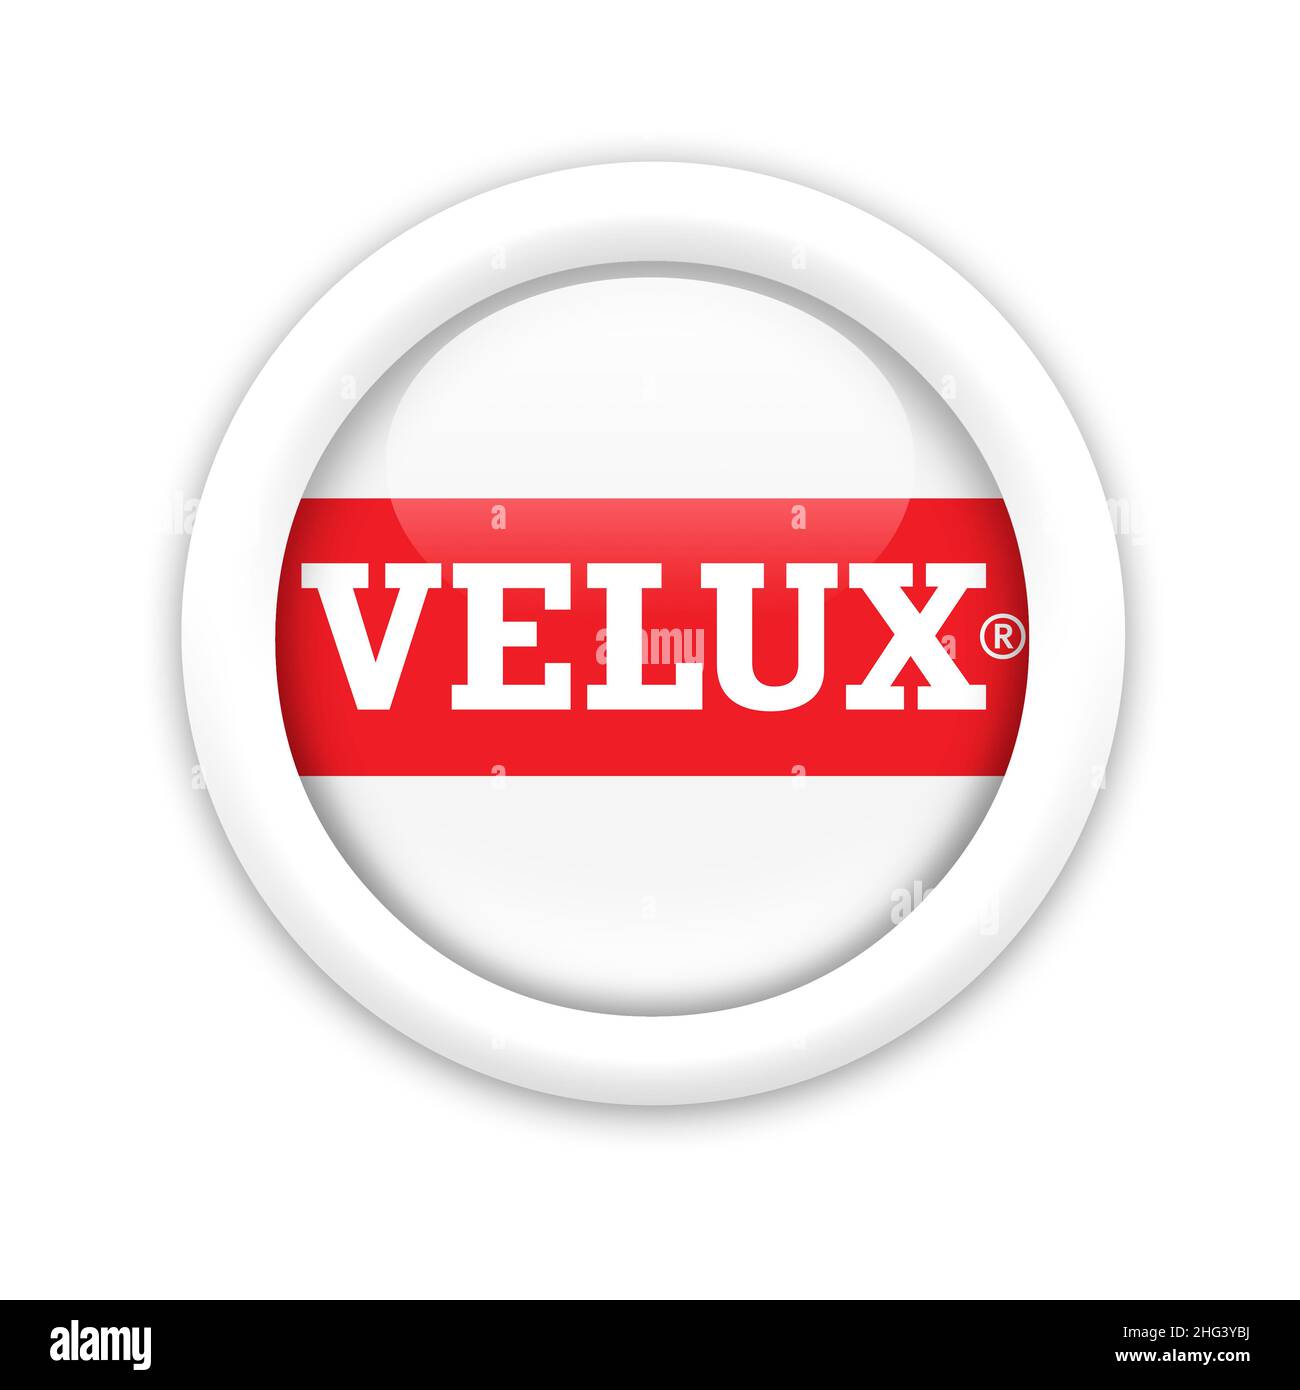 Velux logo Stock Photo